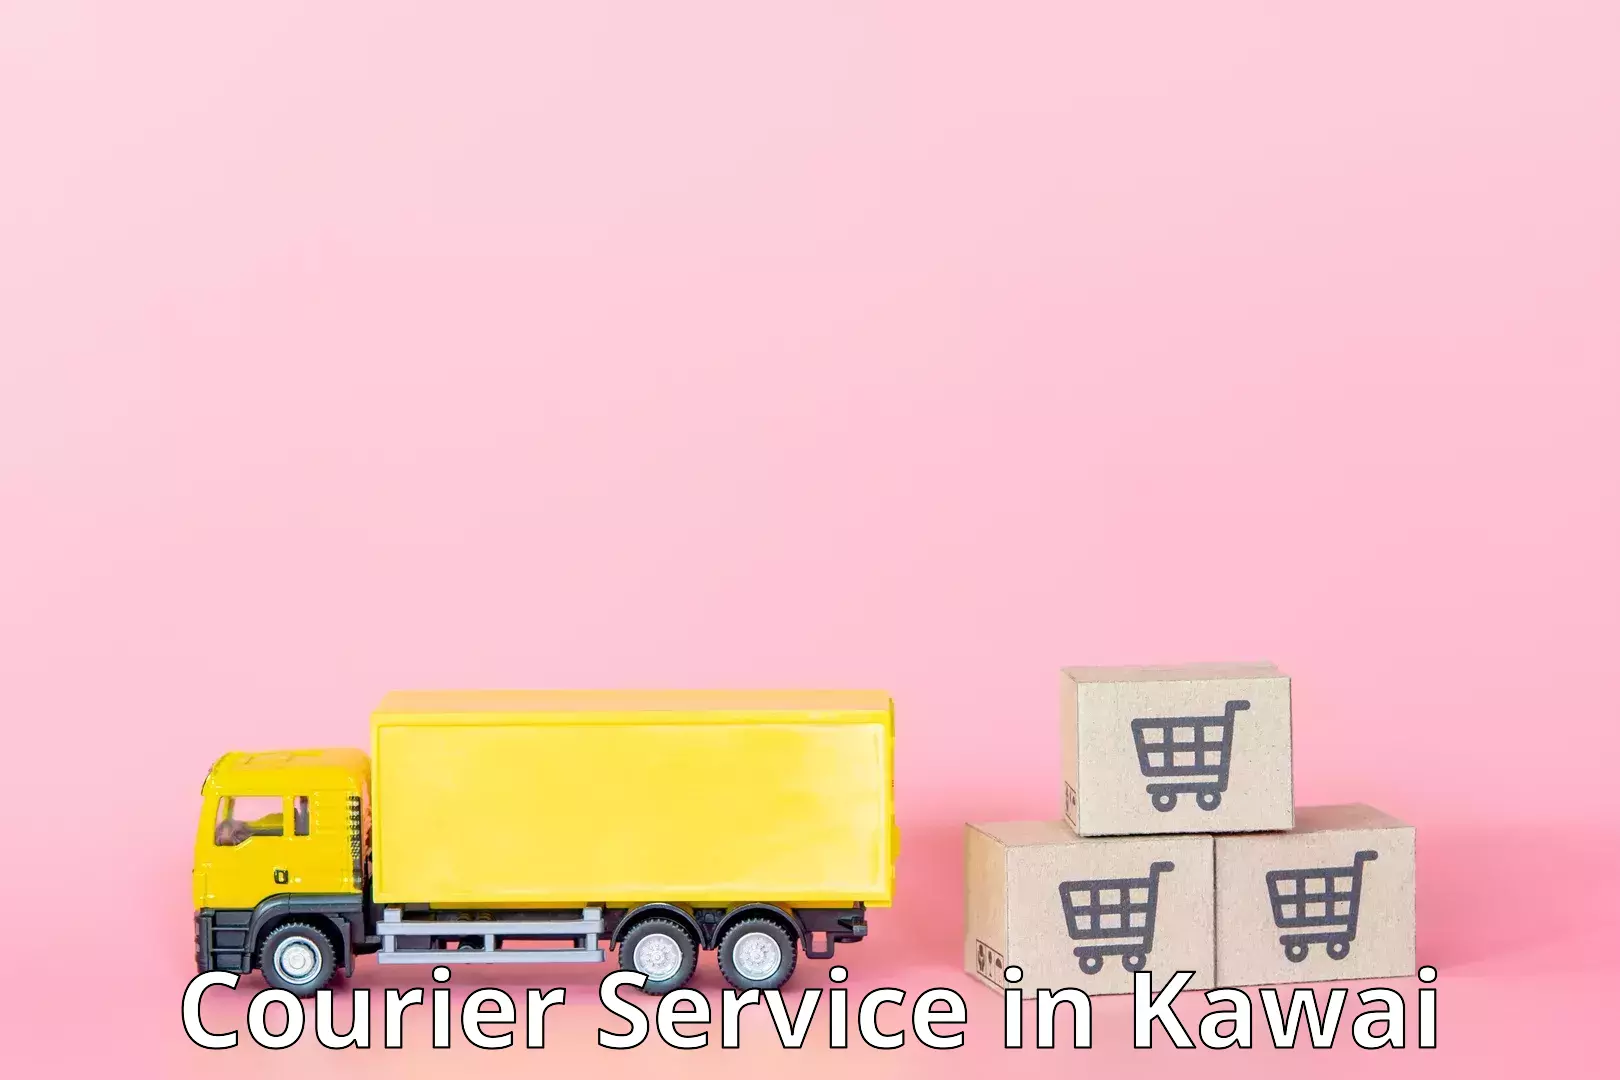 Efficient shipping platforms in Kawai